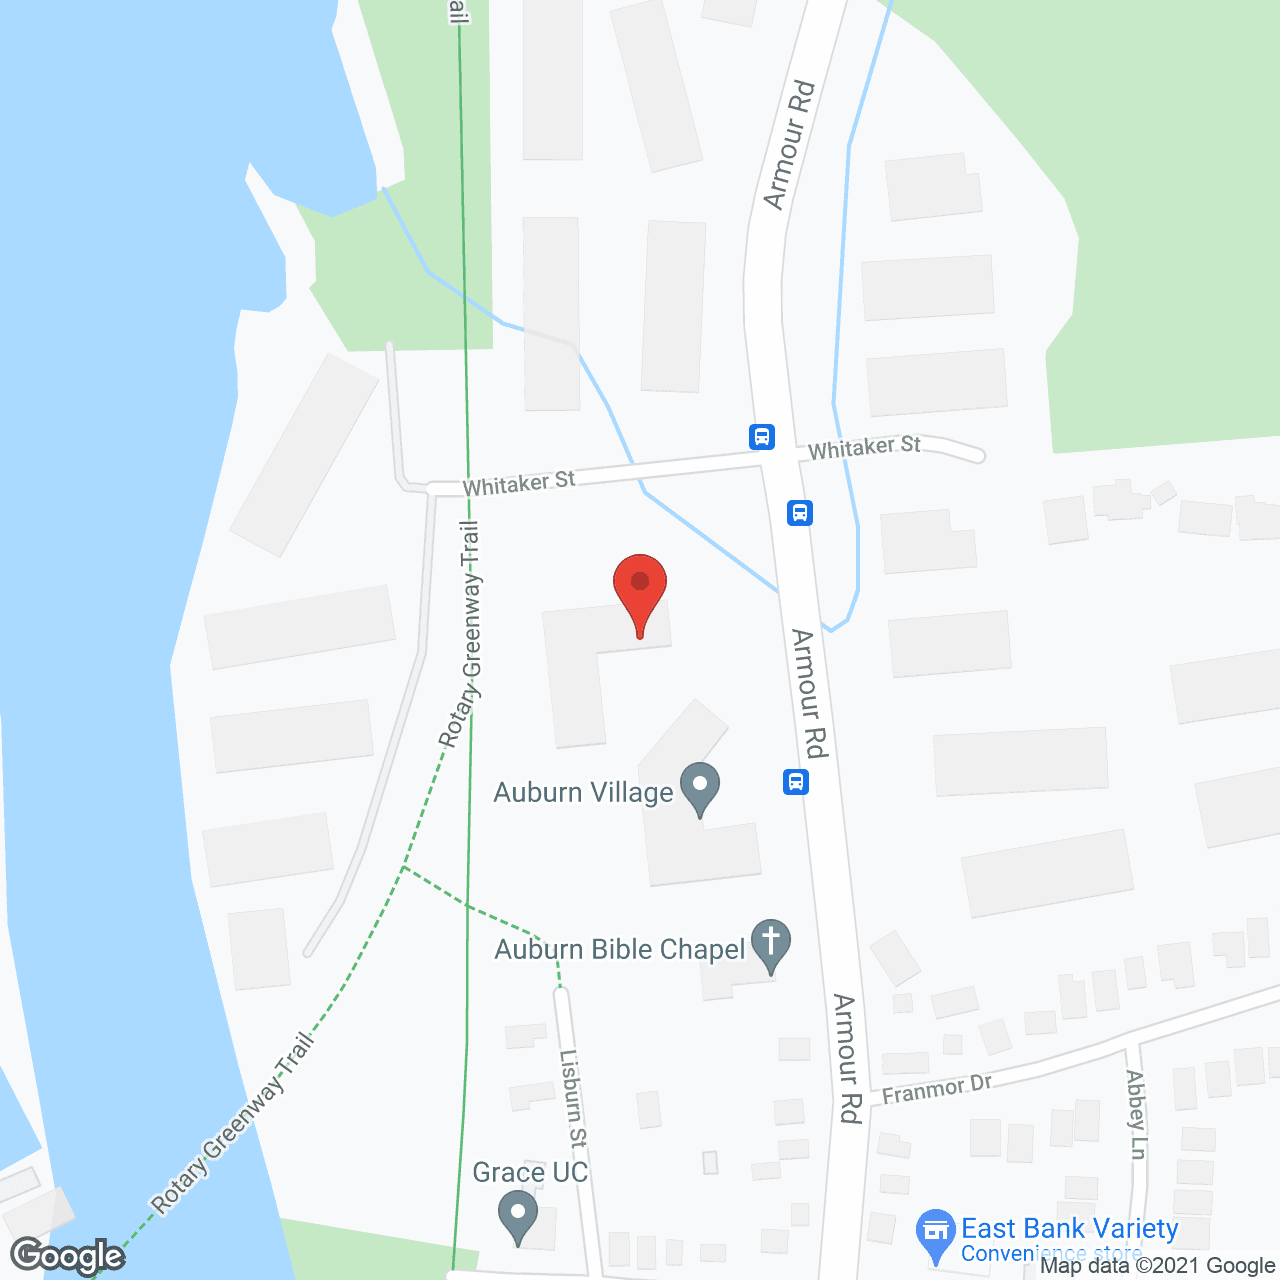 Auburn Village in google map